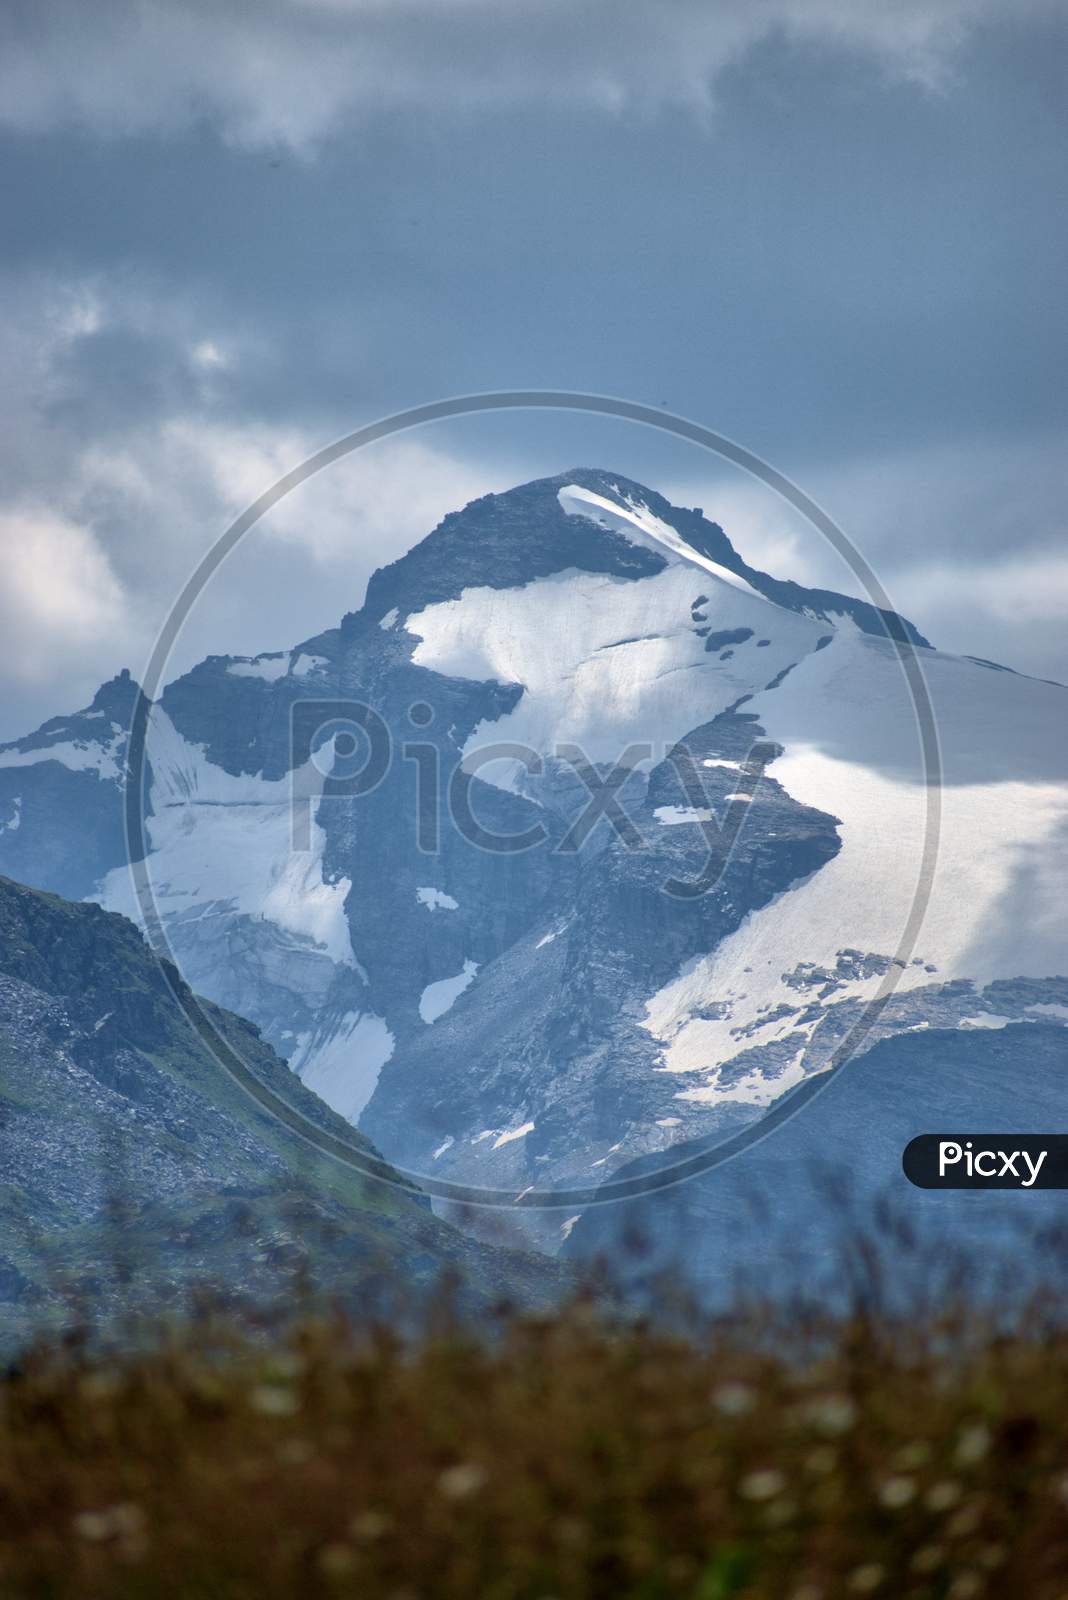 Amazing mountain peaks in Vals in the alps of Switzerland 31.7.2020